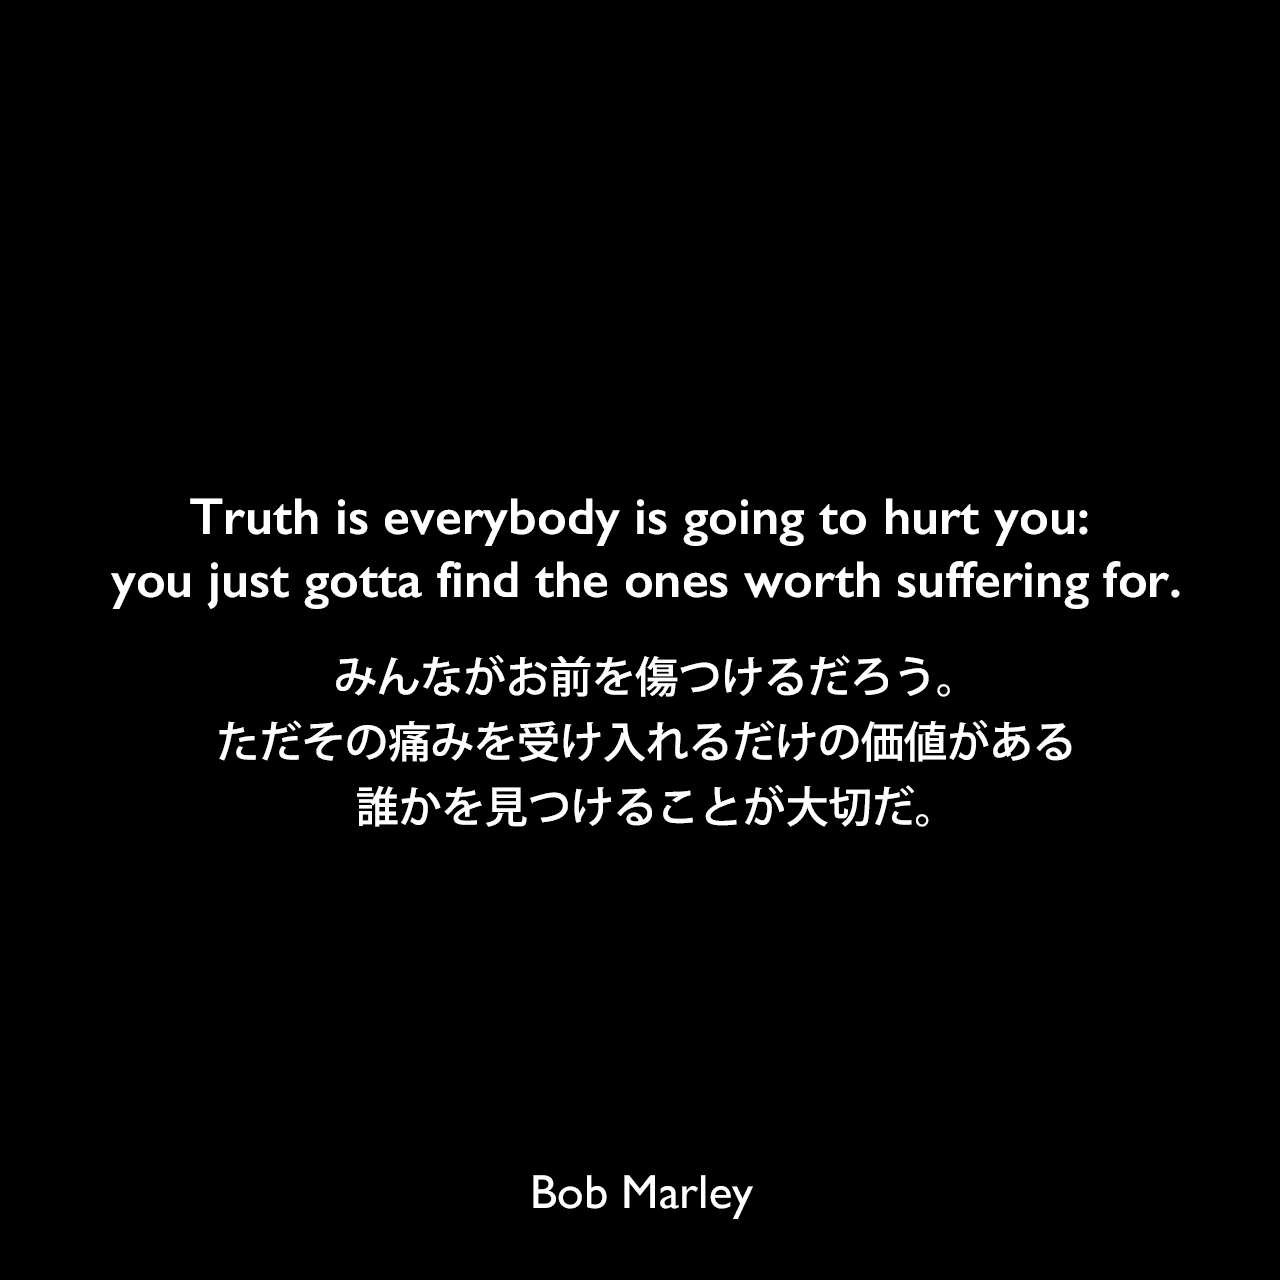 Truth is everybody is going to hurt you: you just gotta find the ones worth suffering for.みんながお前を傷つけるだろう。ただその痛みを受け入れるだけの価値がある誰かを見つけることが大切だ。Bob Marley